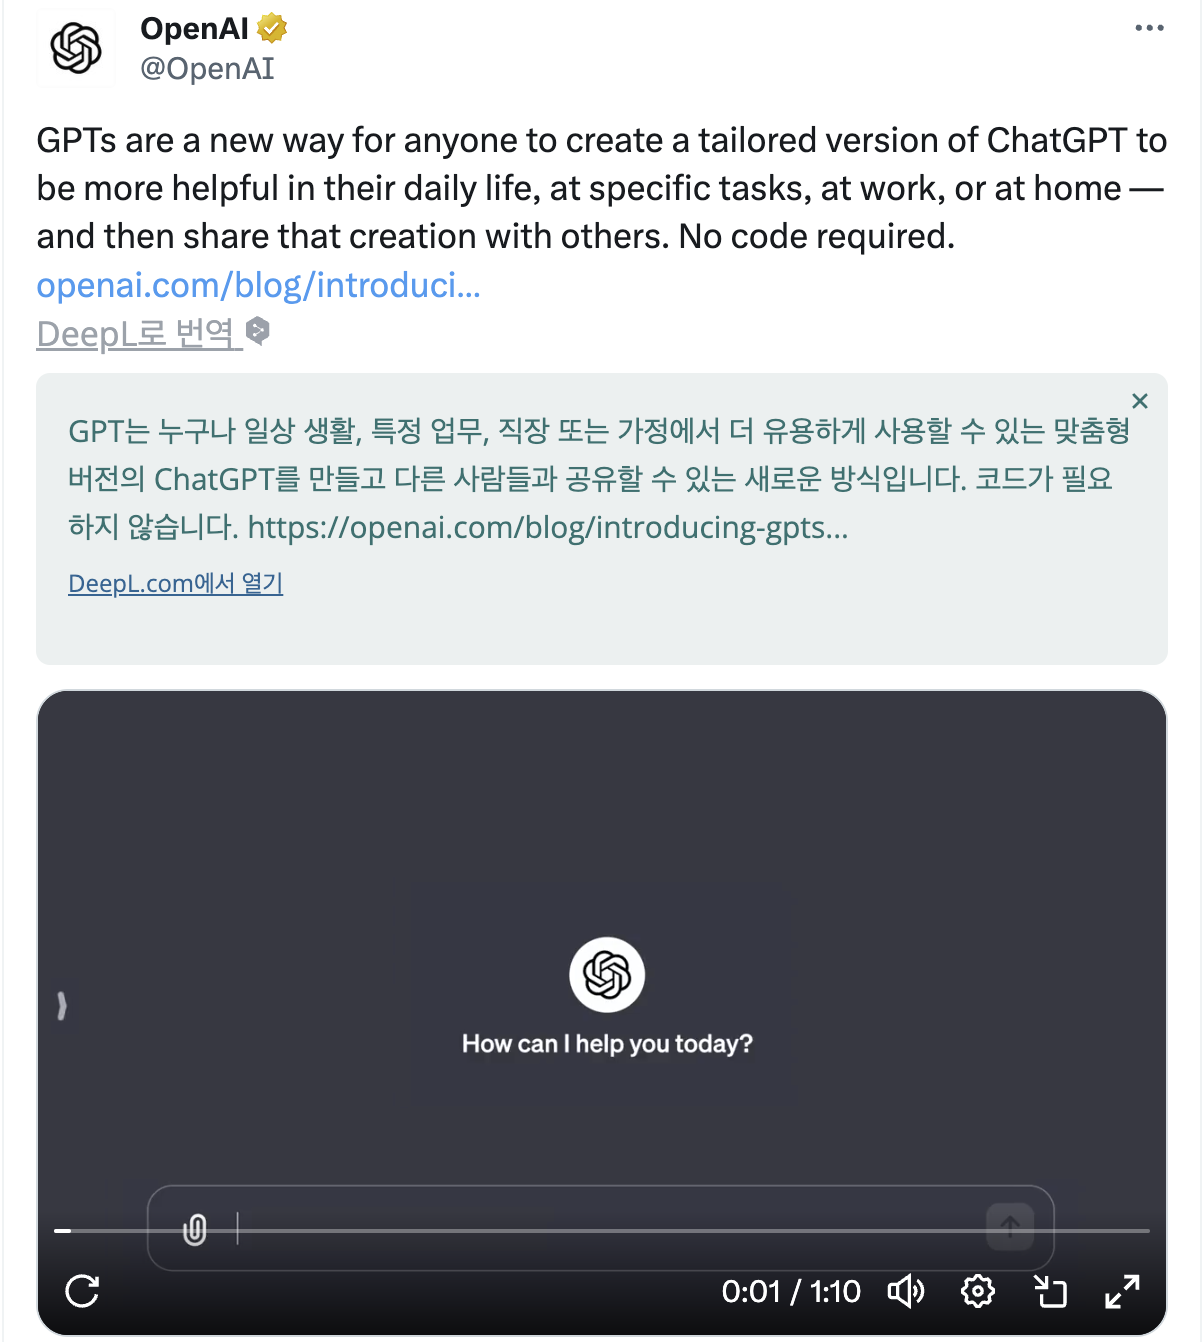 GPTs 소개 영상 보기